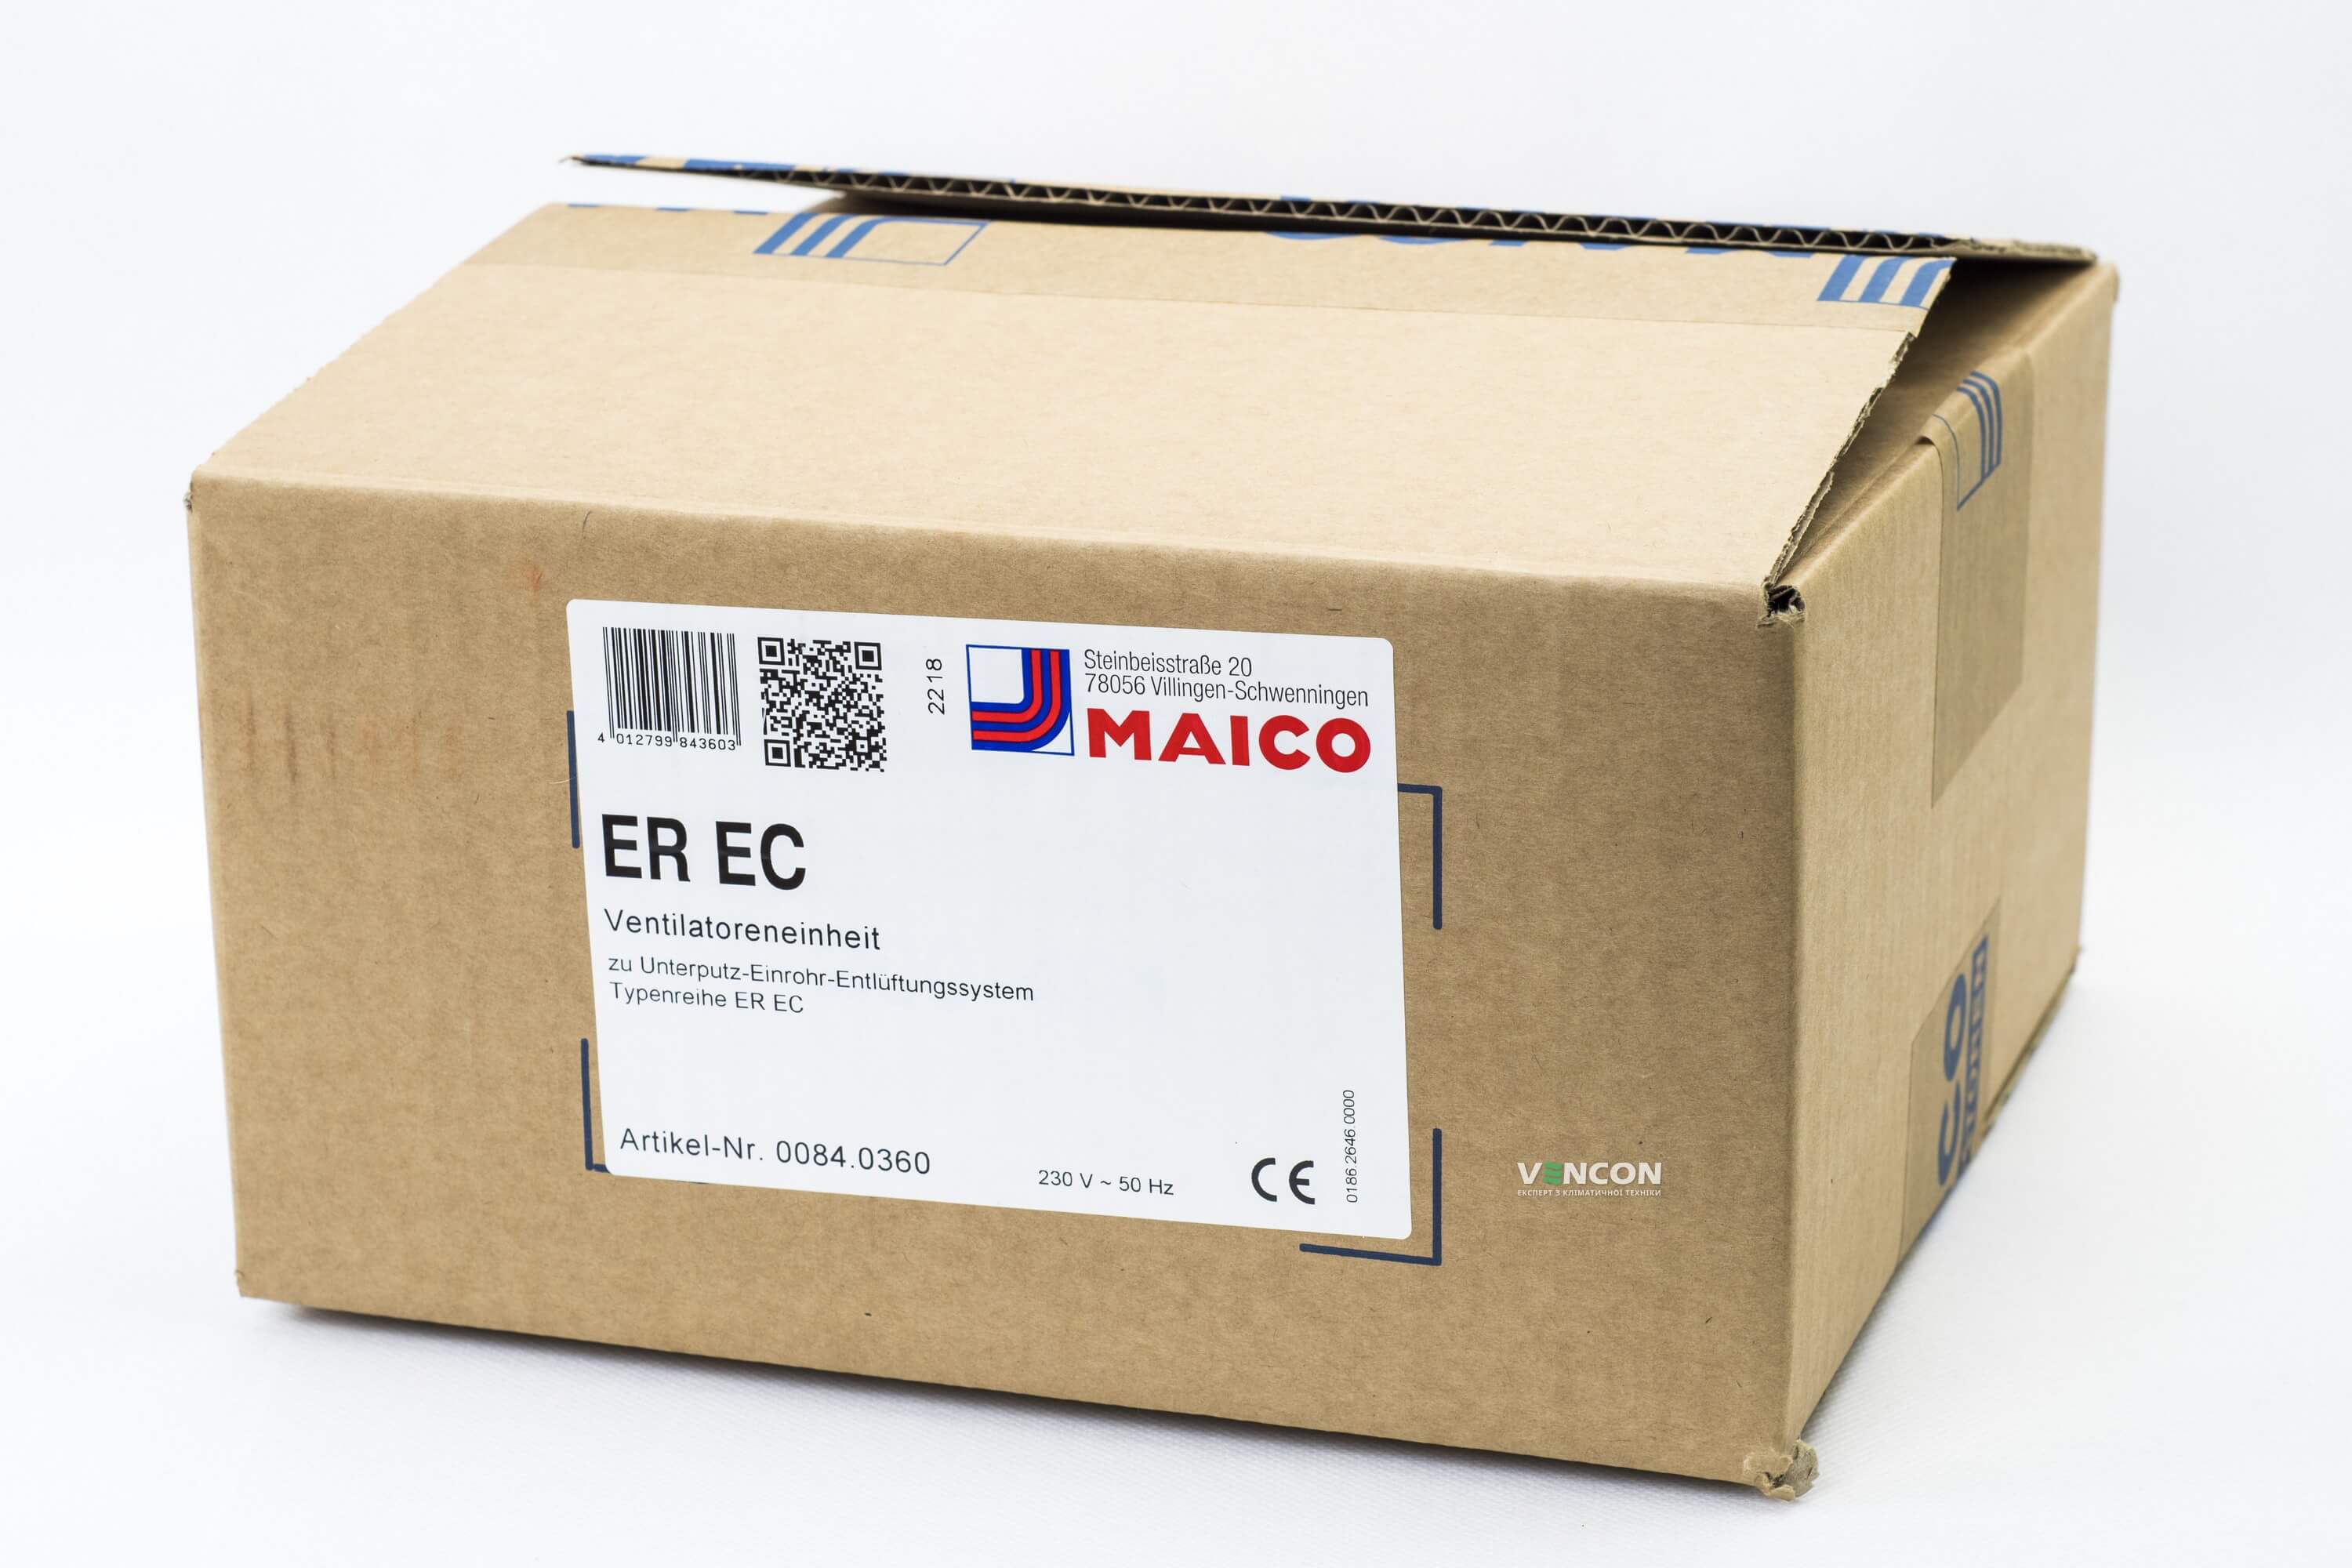 продаємо Maico ER EC в Україні - фото 4